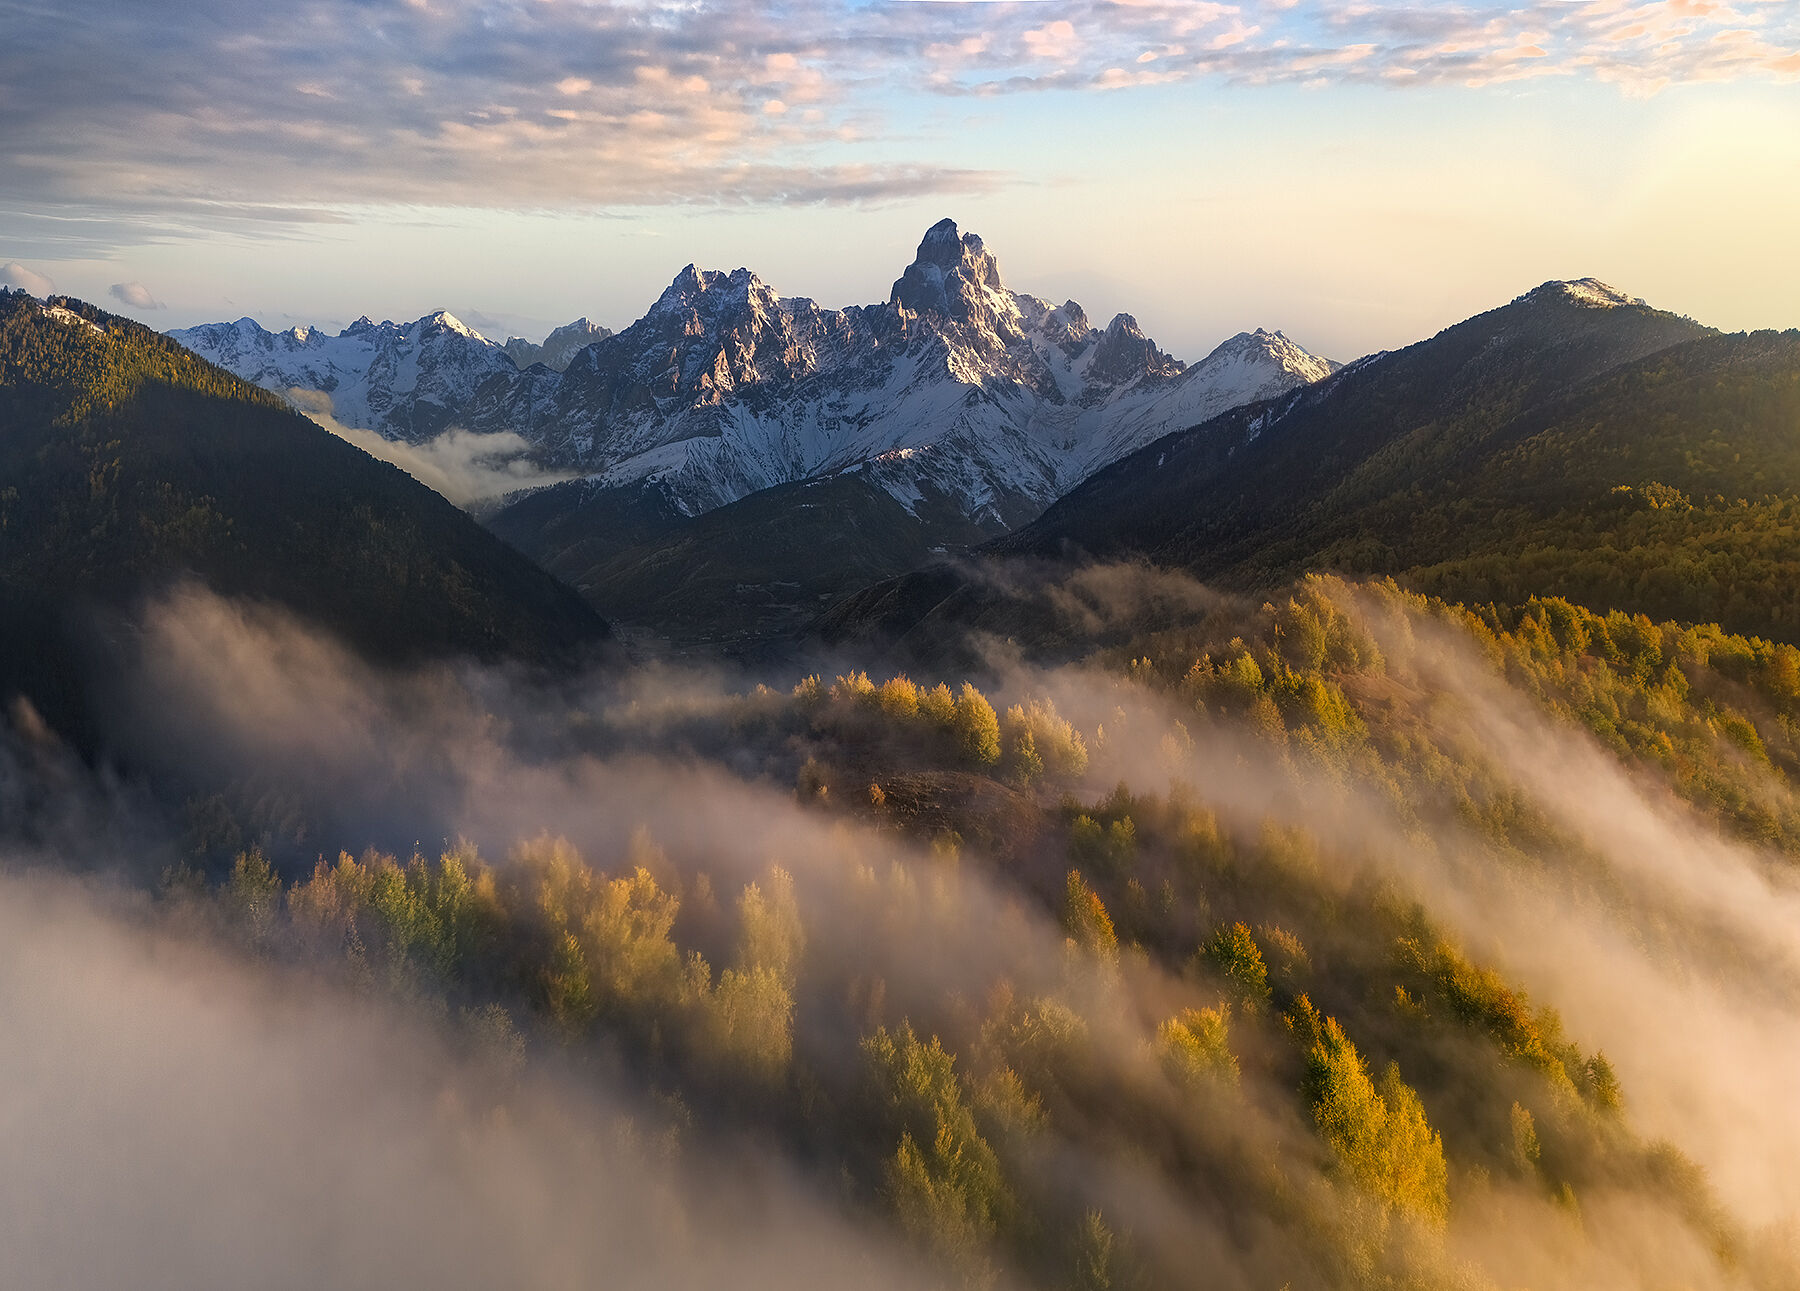 Georgia, Caucasus, mountains, Svaneti, autumn, fall, colors